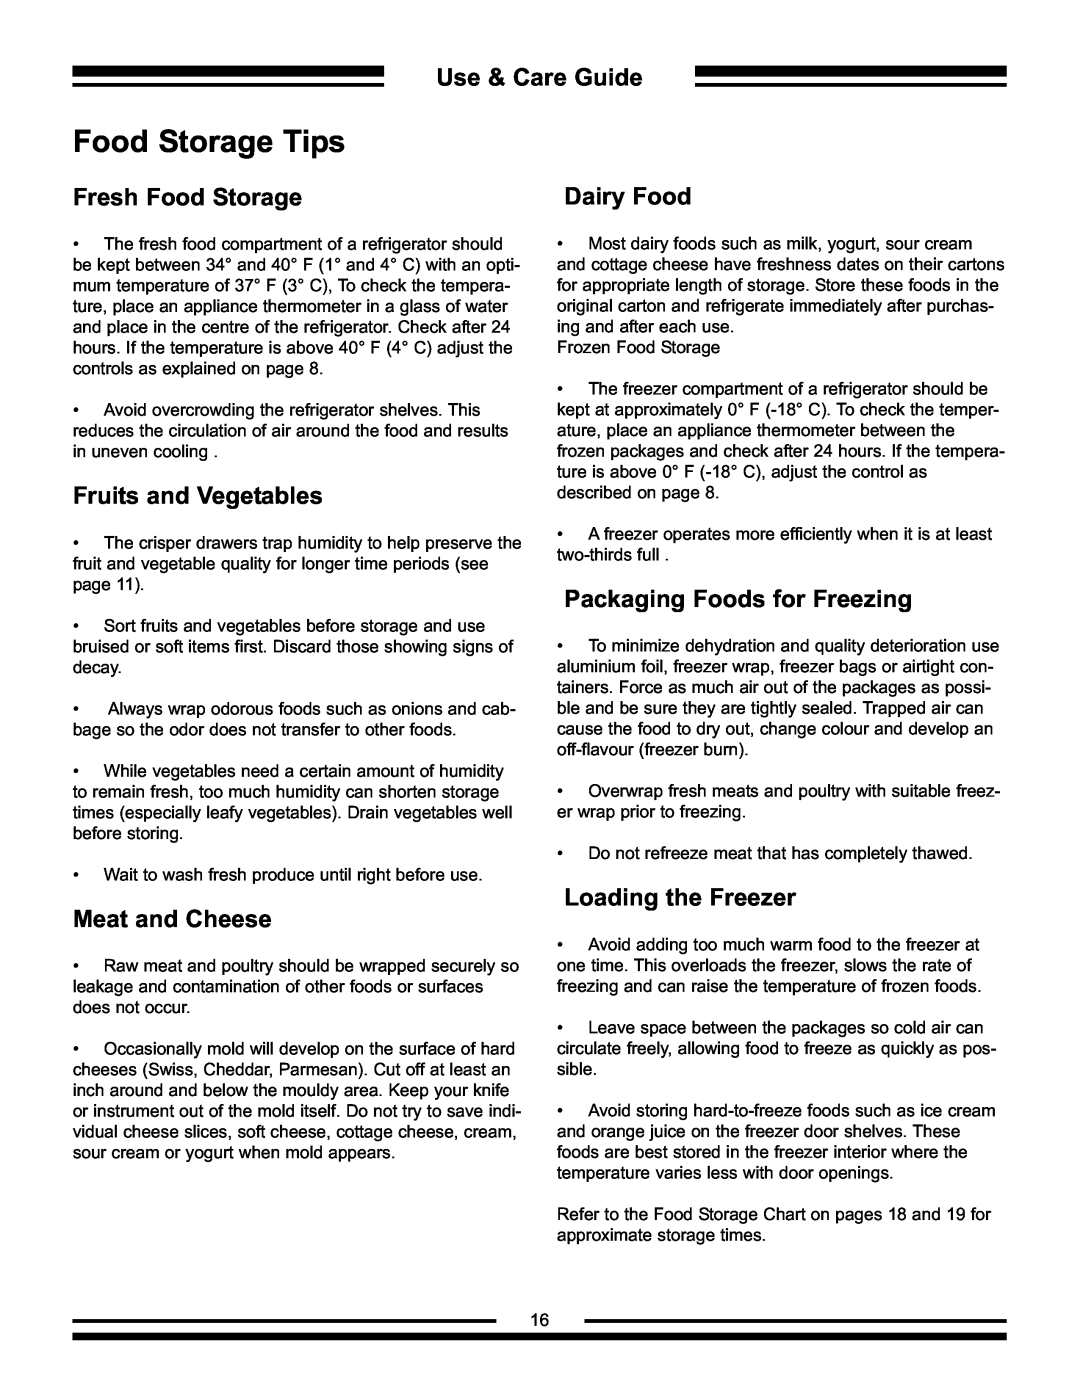 Aga Ranges AFHR-36 Food Storage Tips, Fresh Food Storage, Fruits and Vegetables, Dairy Food, Packaging Foods for Freezing 